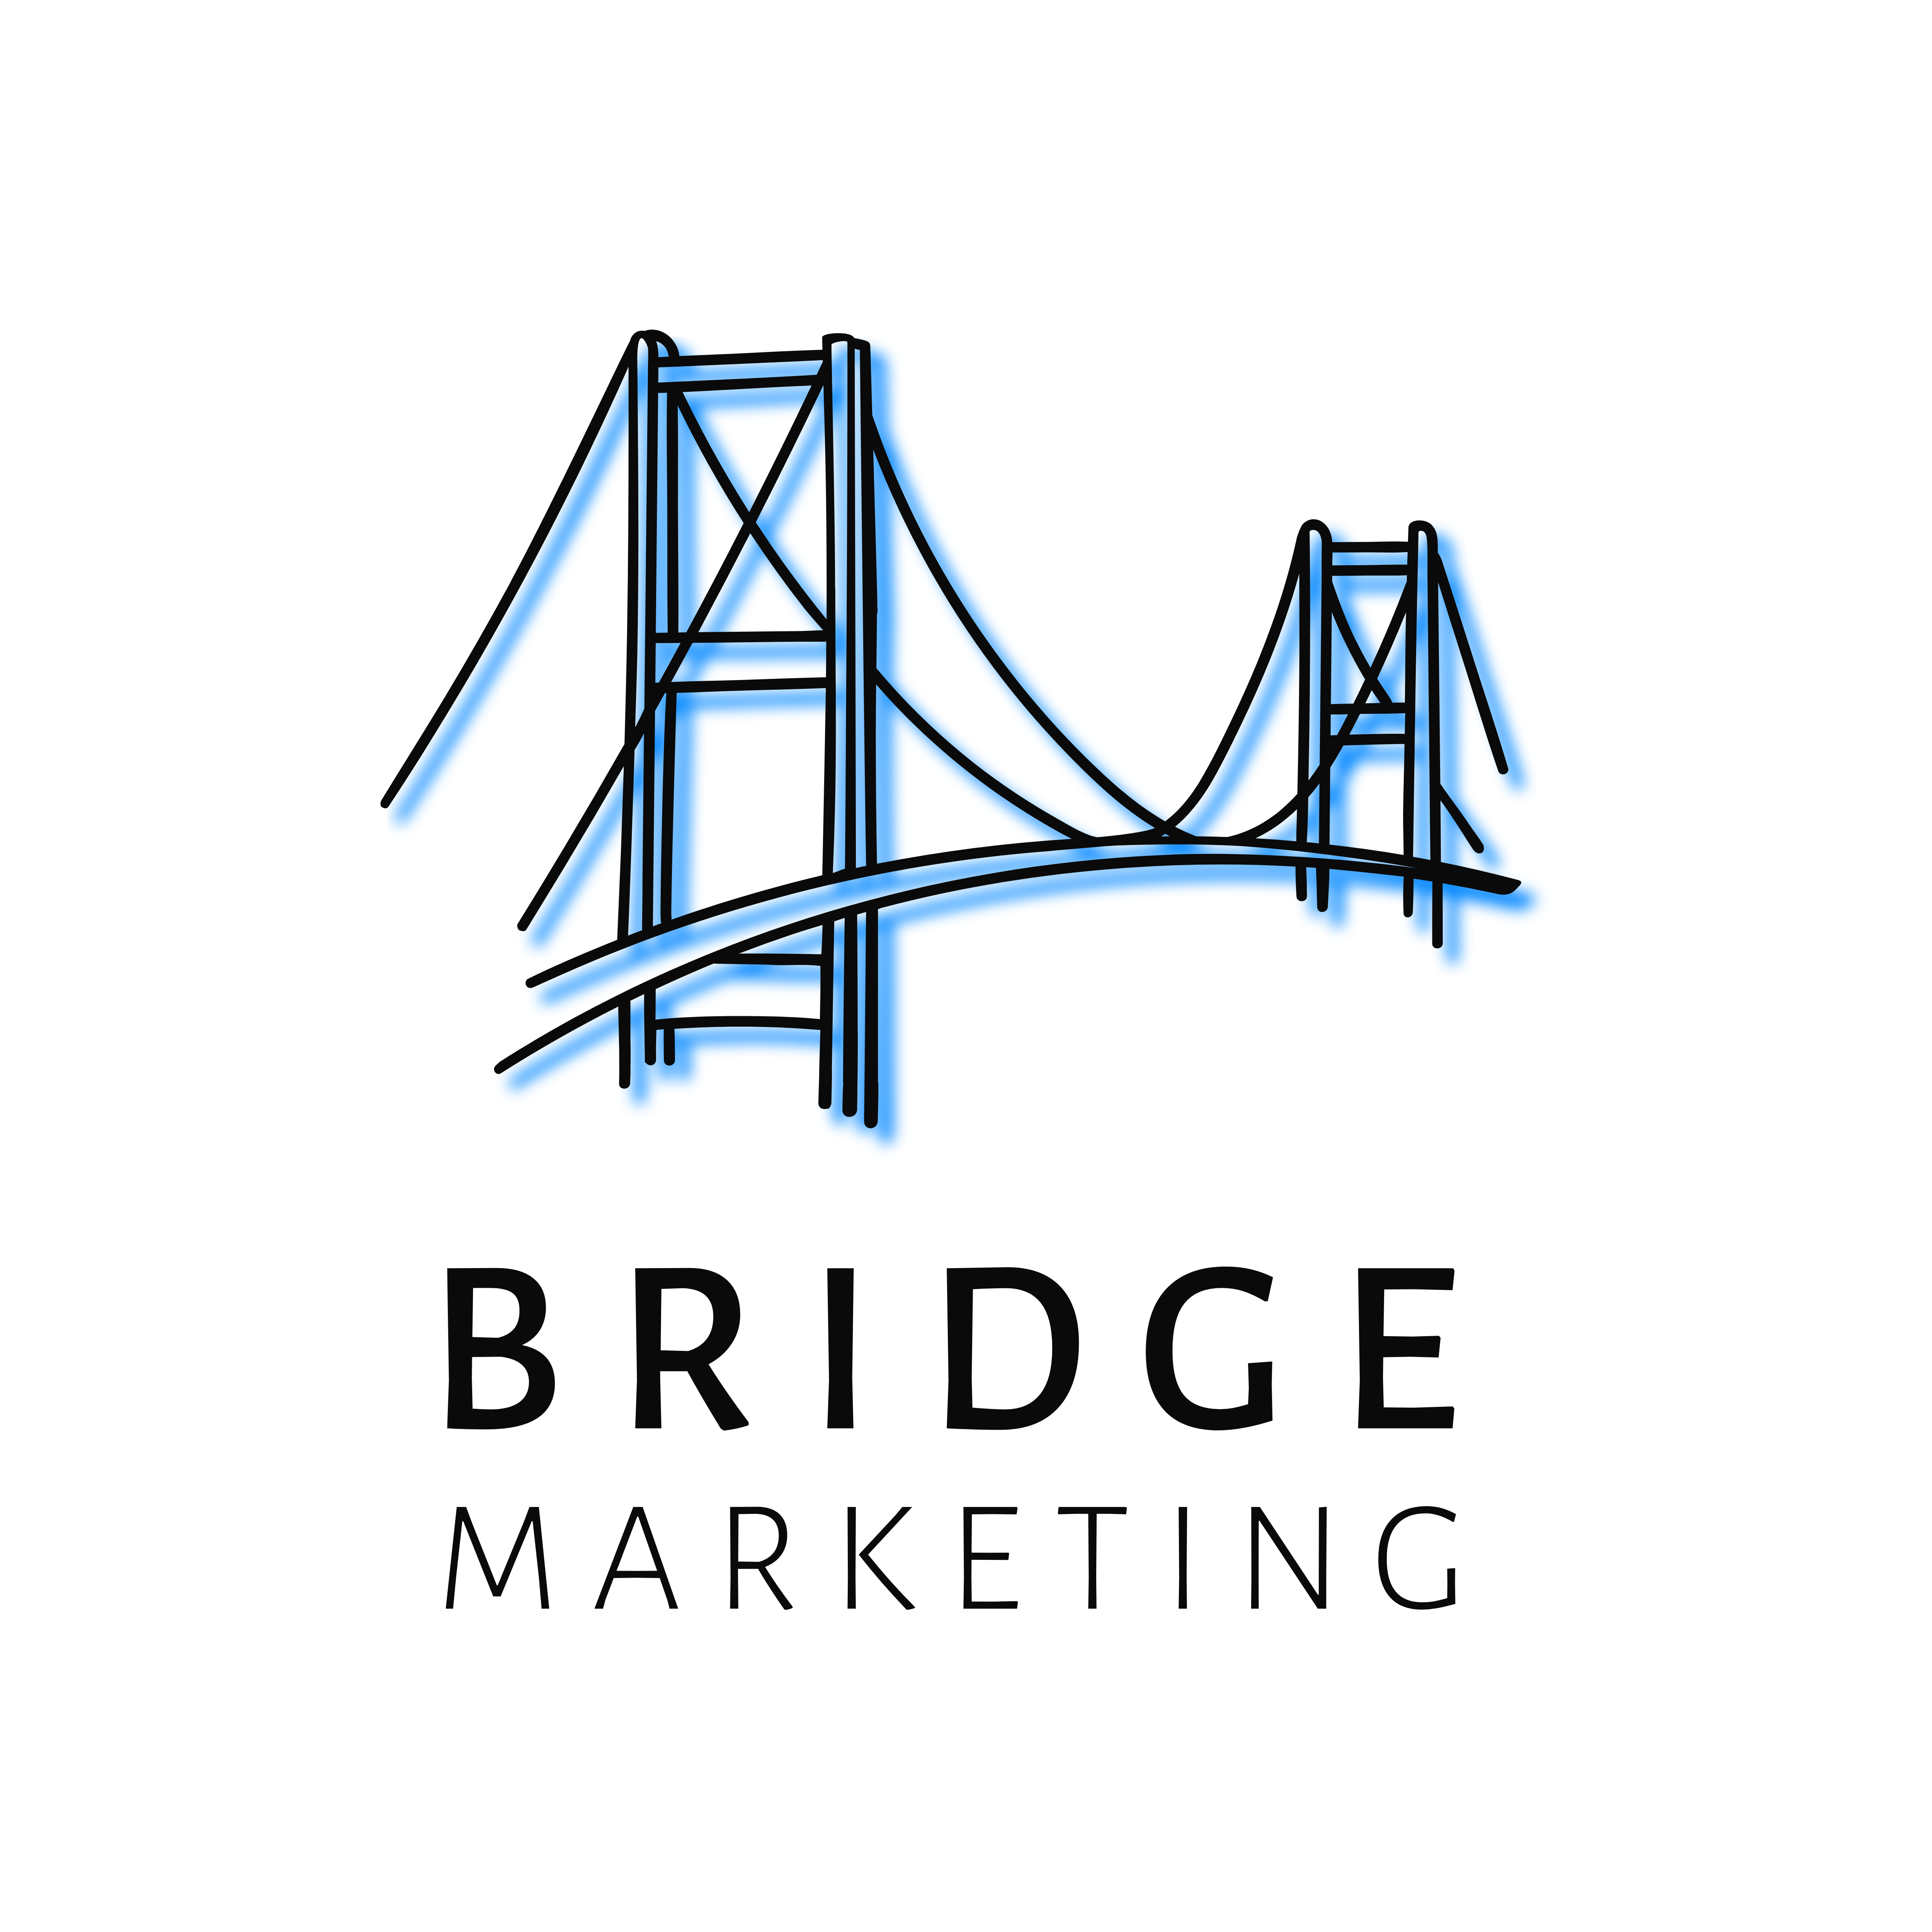 Bridge Marketing - web design, copywriting, marketing, branding